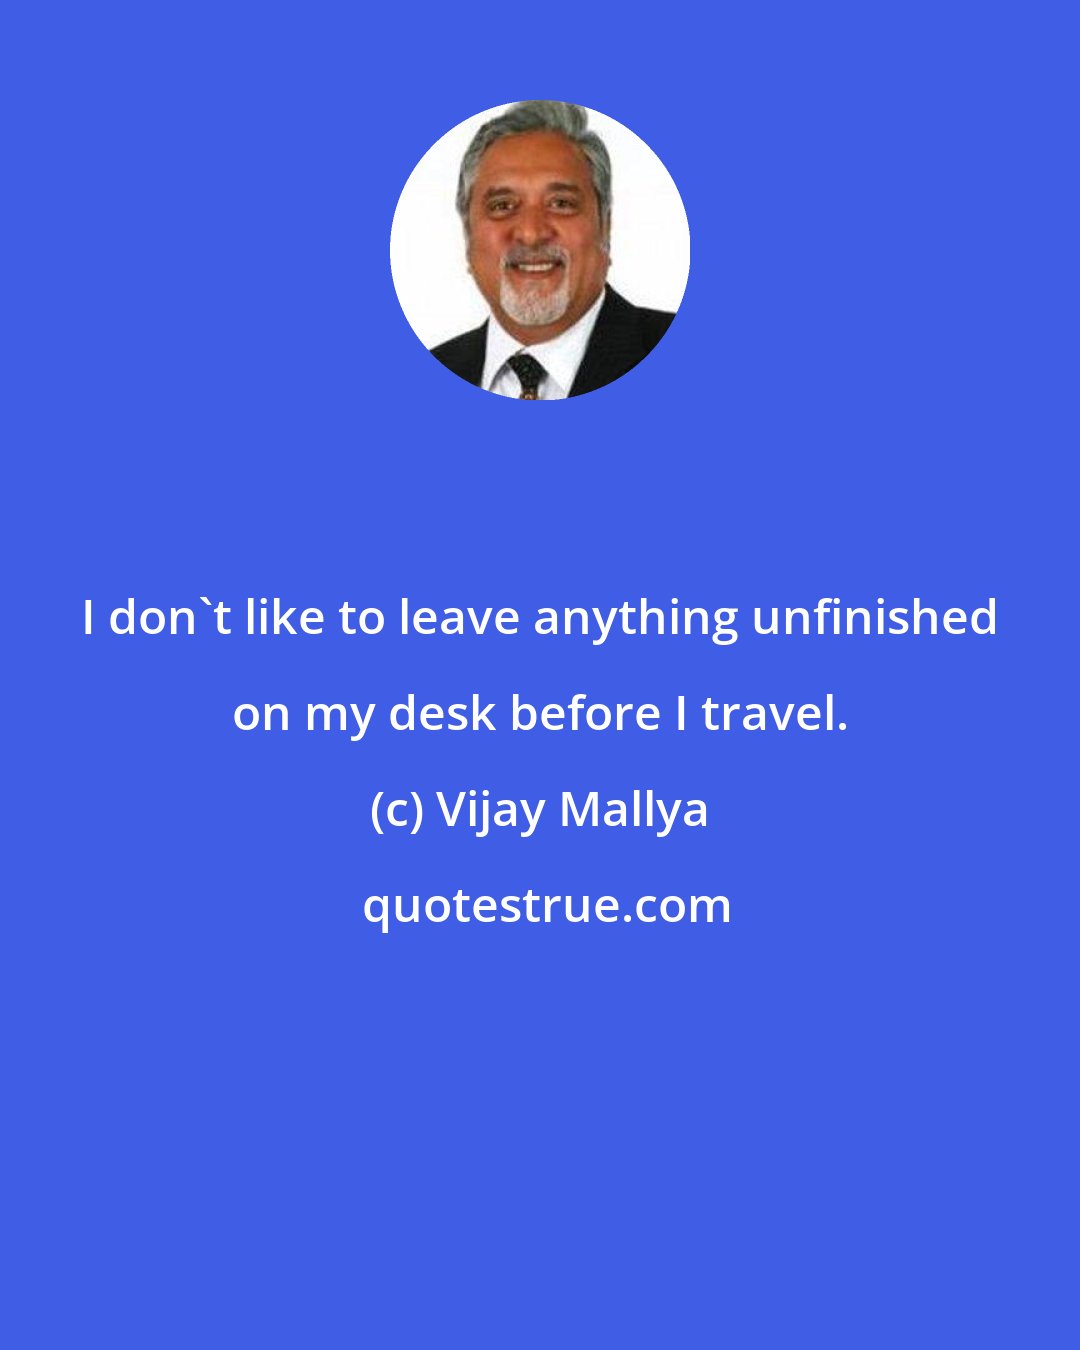 Vijay Mallya: I don't like to leave anything unfinished on my desk before I travel.